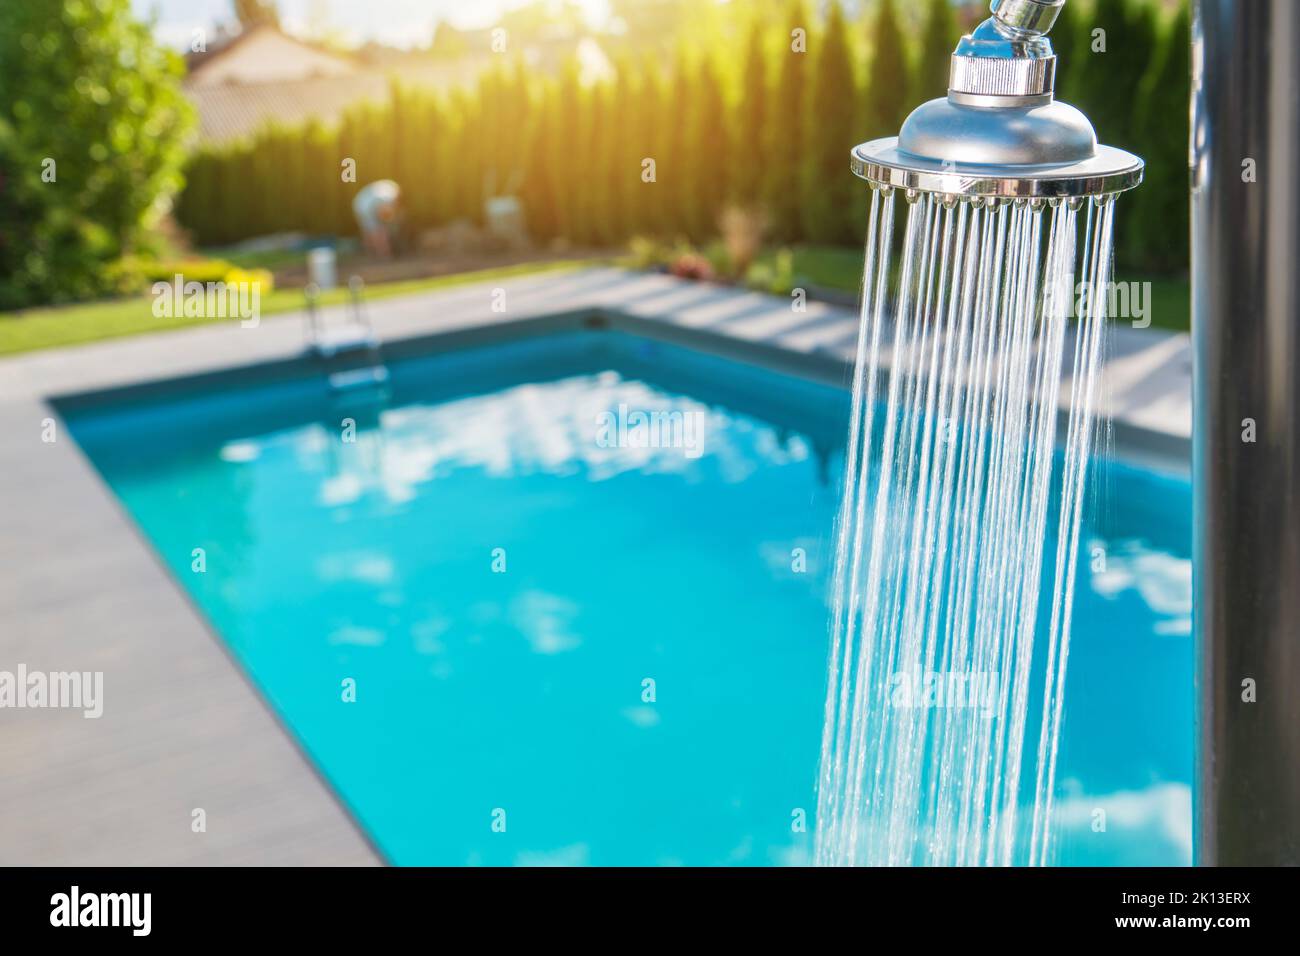 Running Outdoor Swimming Pool Shower. Residential Backyard Recreation. Stock Photo